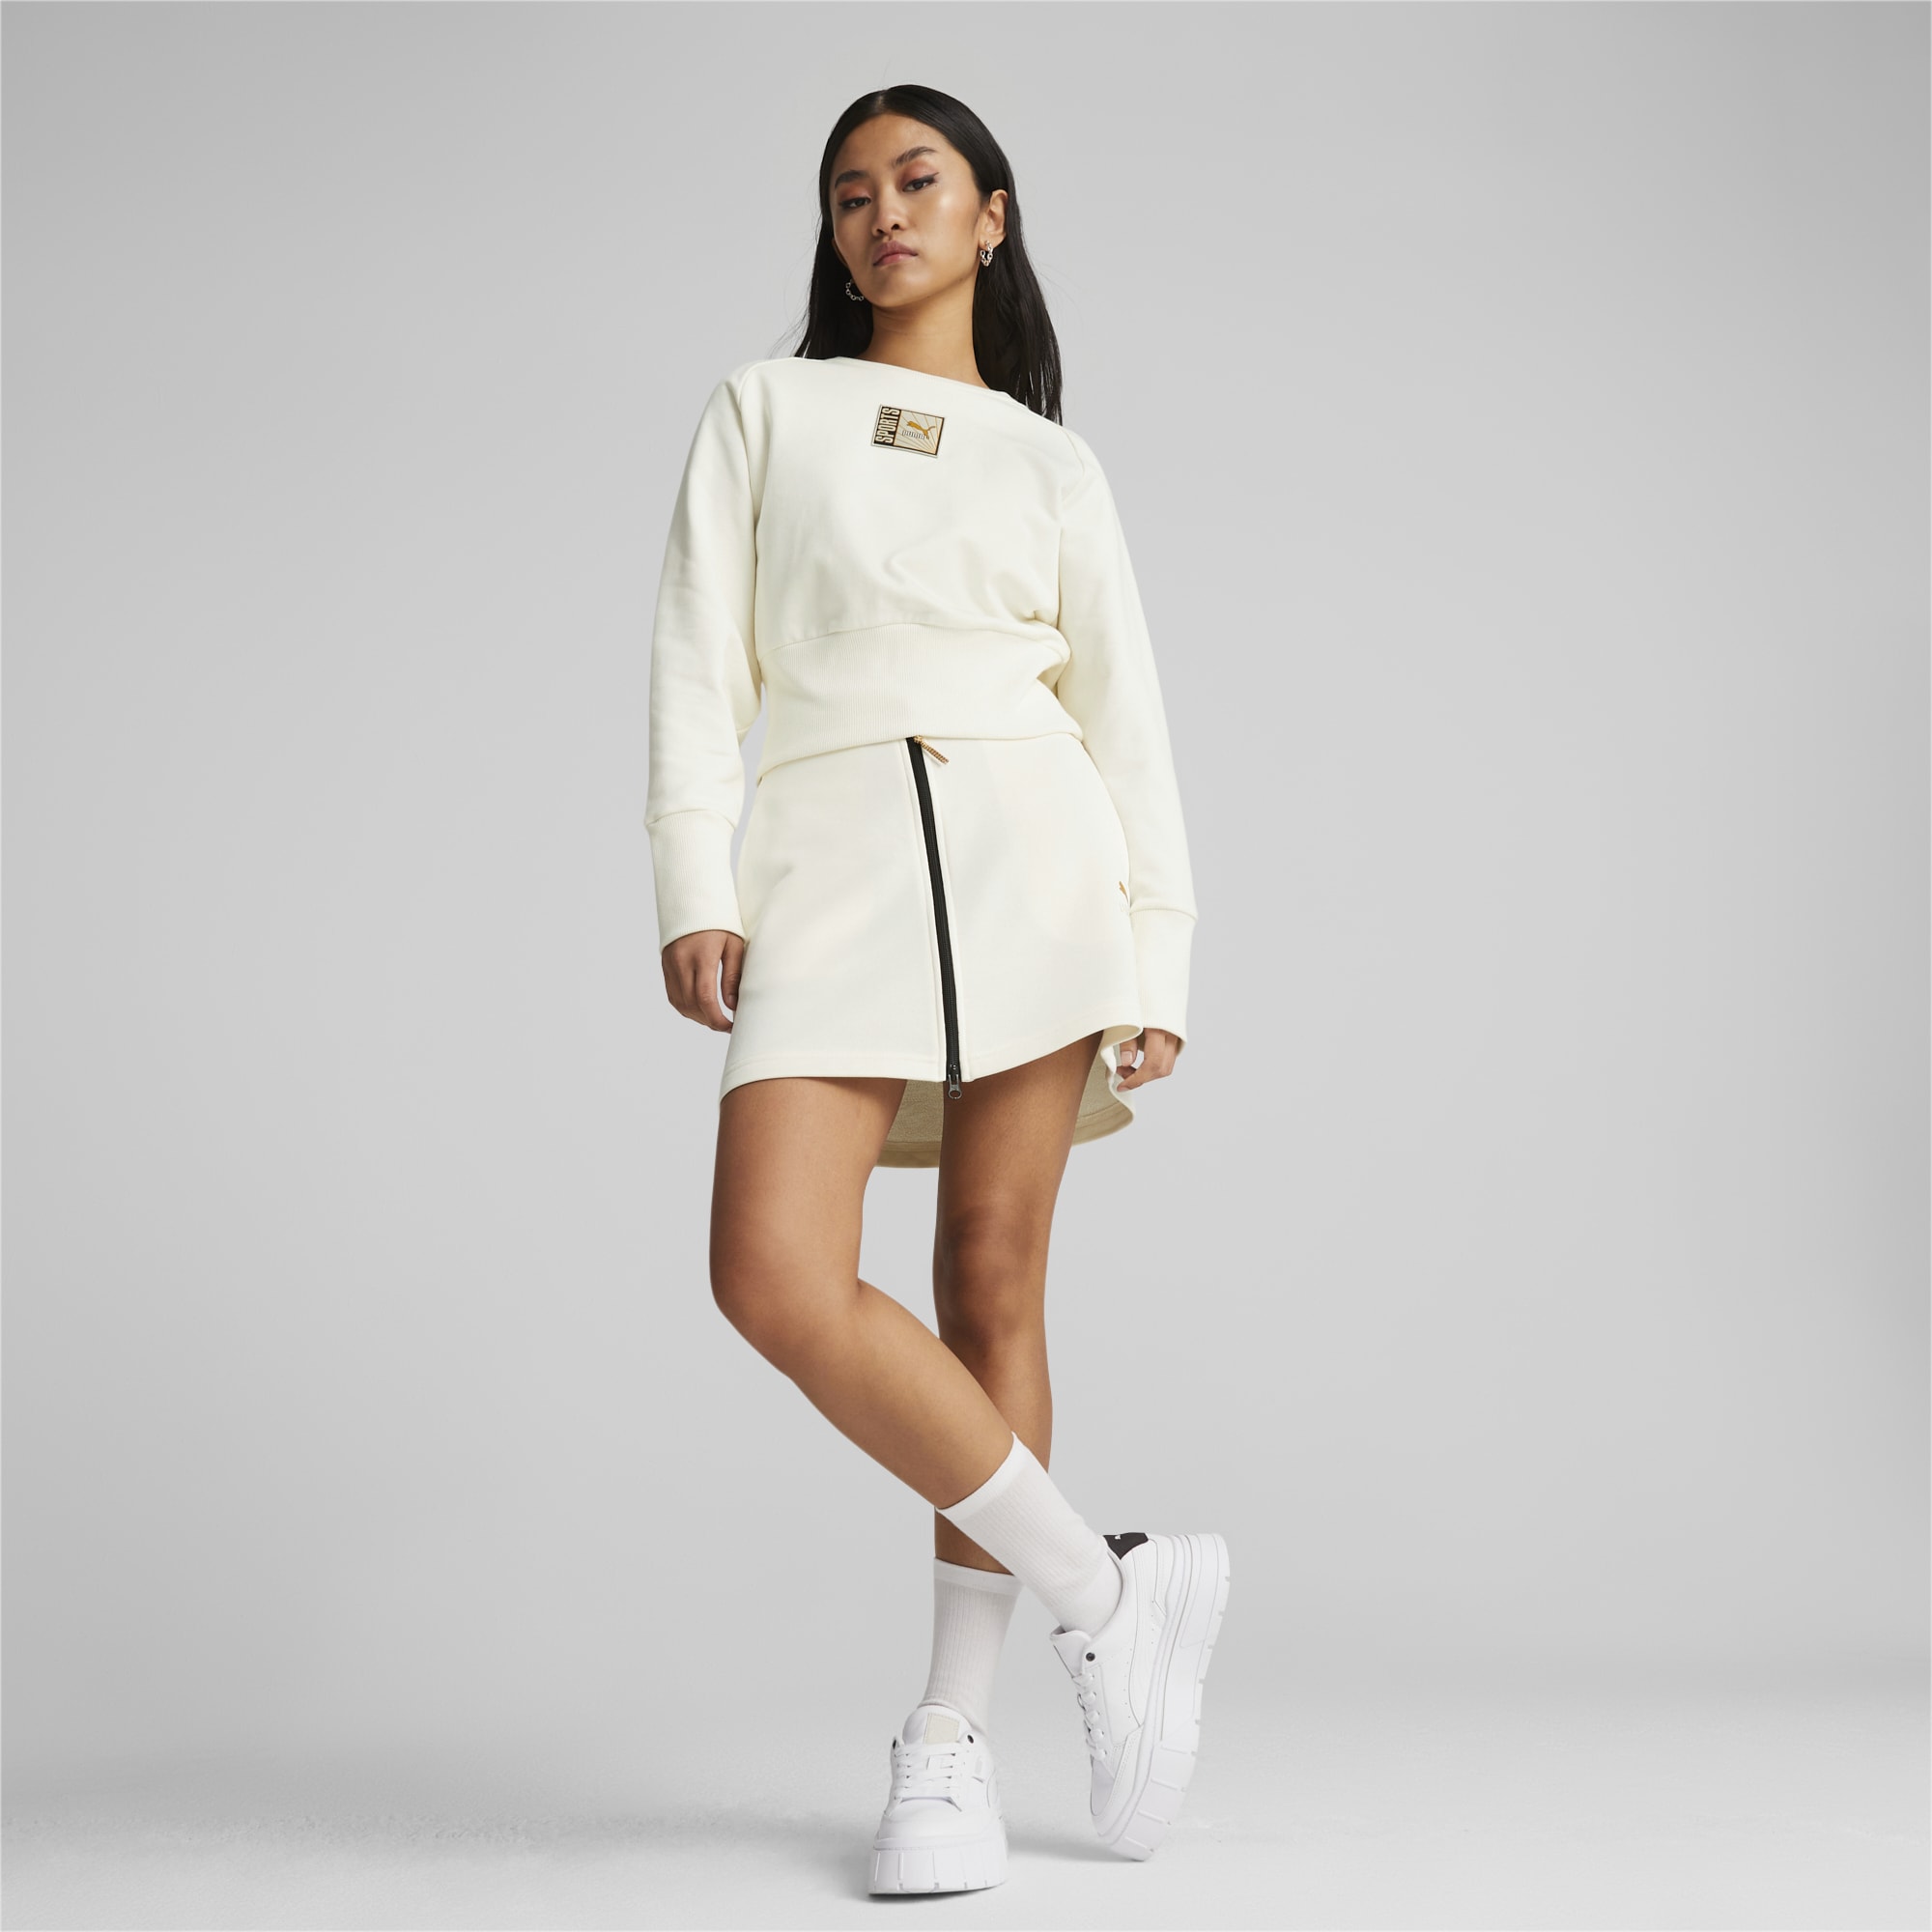 PUMA Classics Women's Sweatshirt, Warm White, Size XS, Clothing